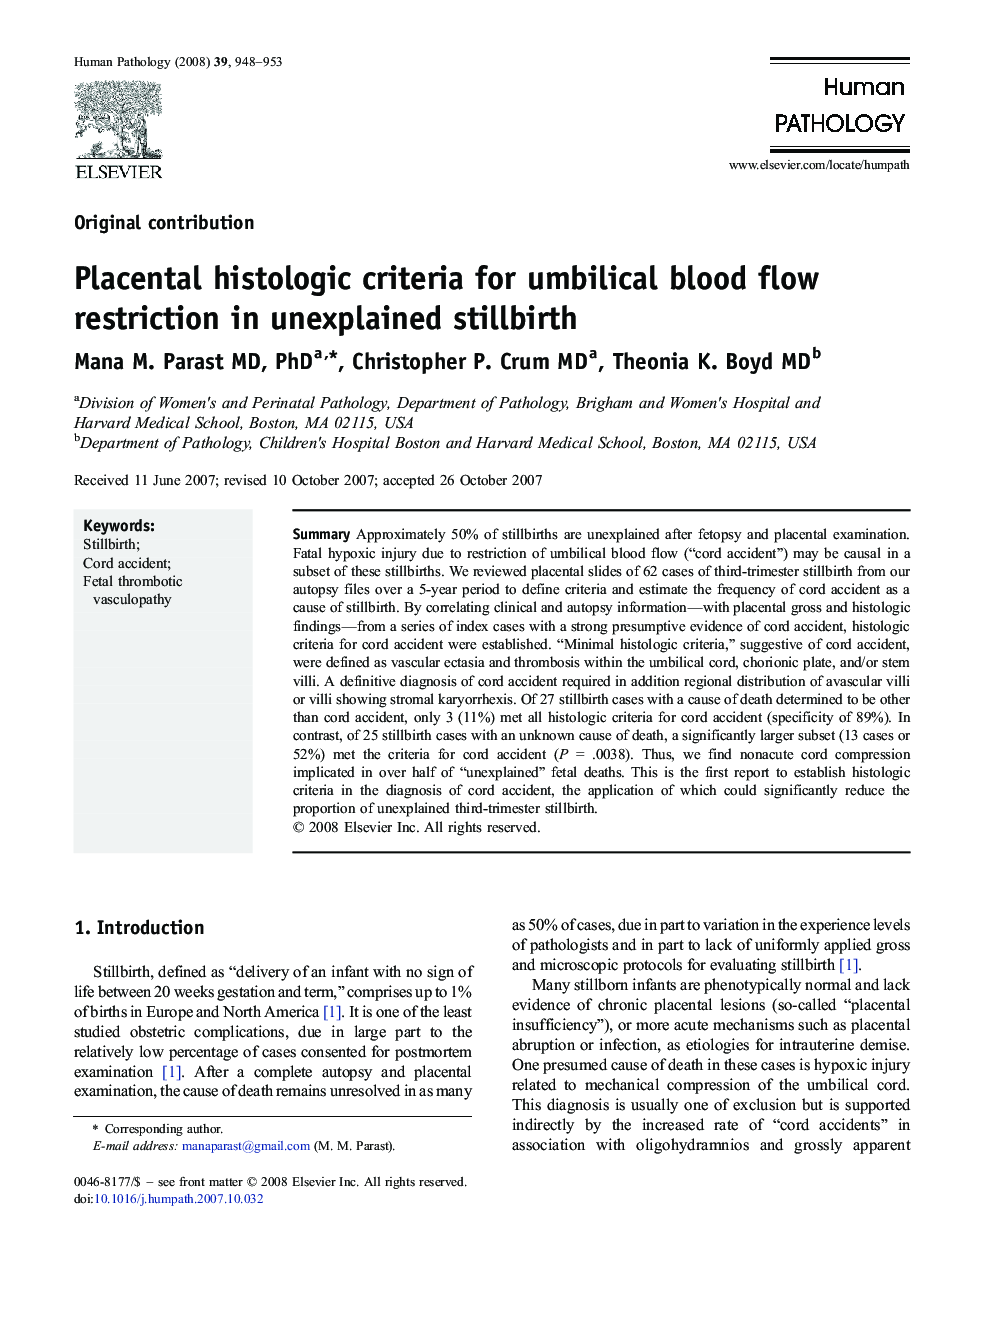 Placental histologic criteria for umbilical blood flow restriction in unexplained stillbirth